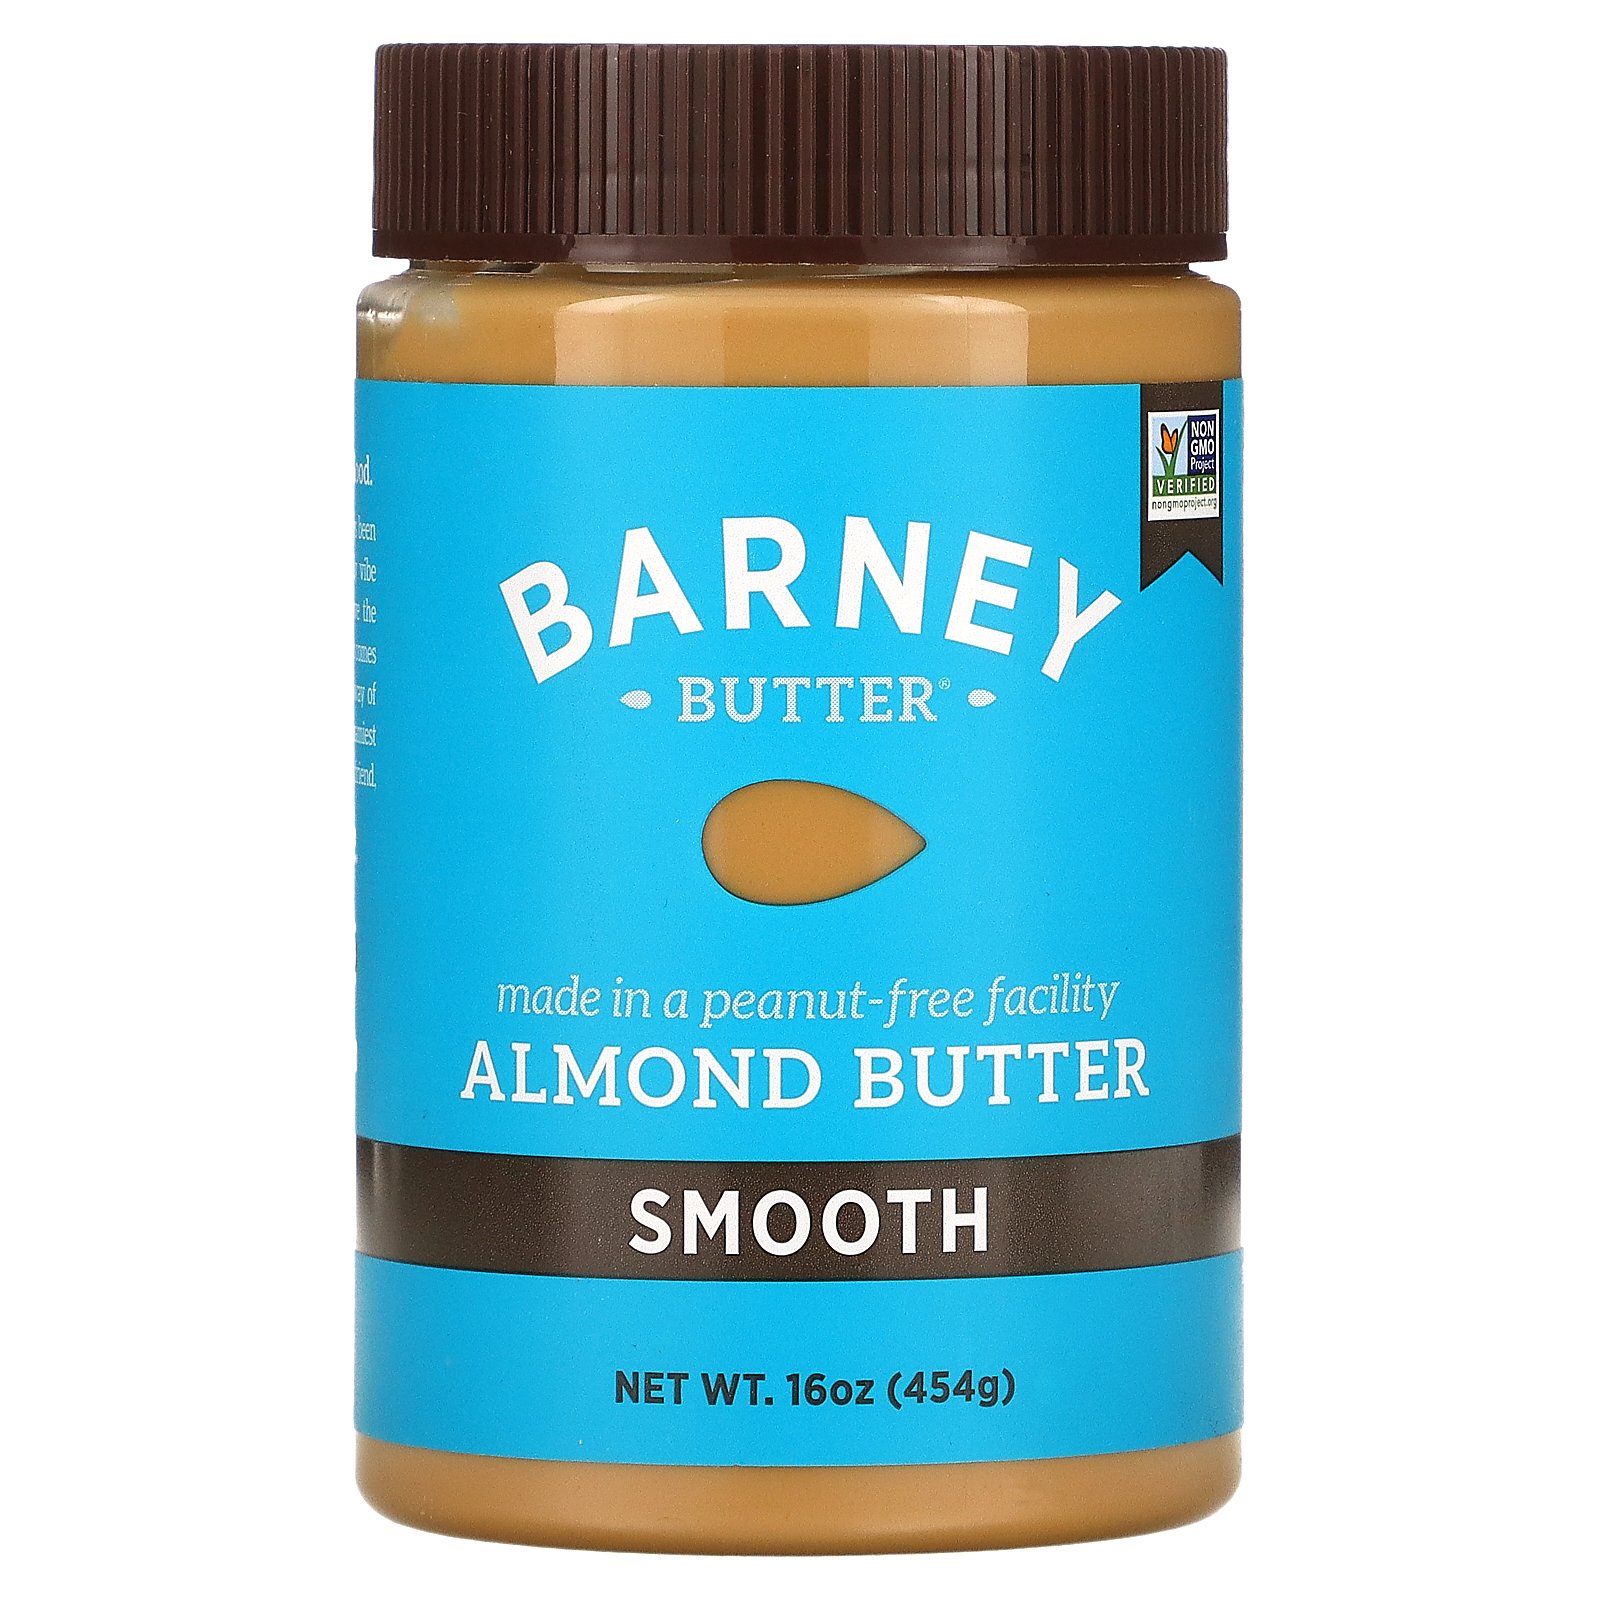 Barney Butter アーモンドバター 【 iHerb アイハーブ 公式 】 バーニーバター スムース 454g